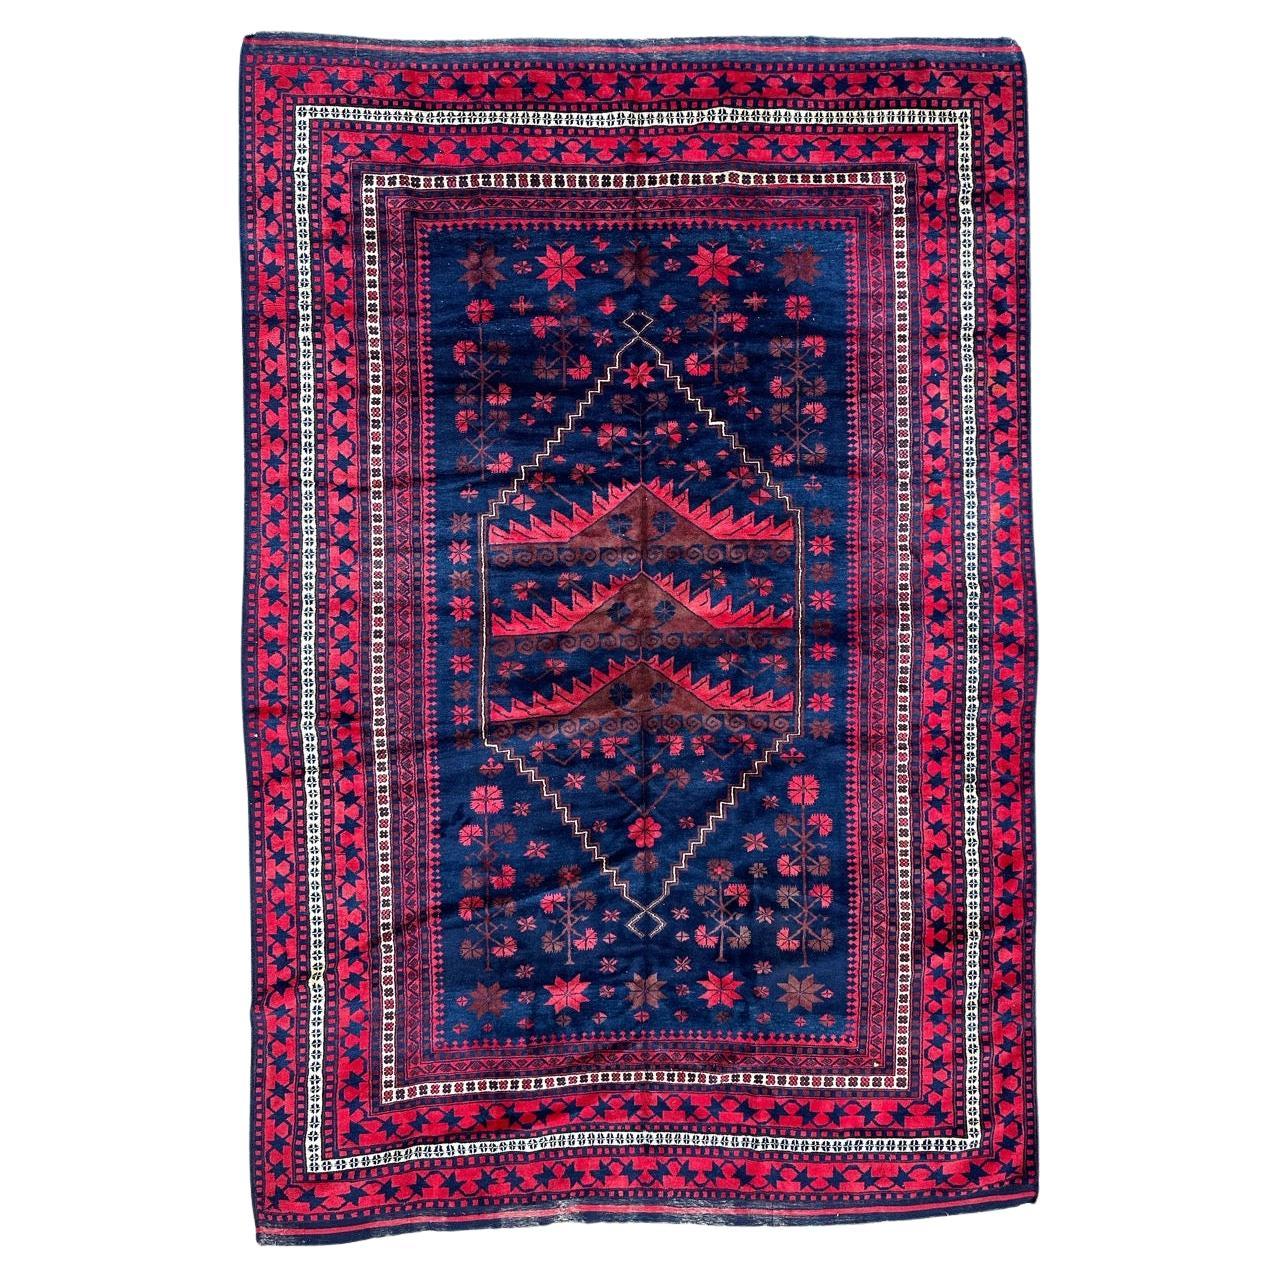 Bobyrug’s nice large vintage Turkish rug